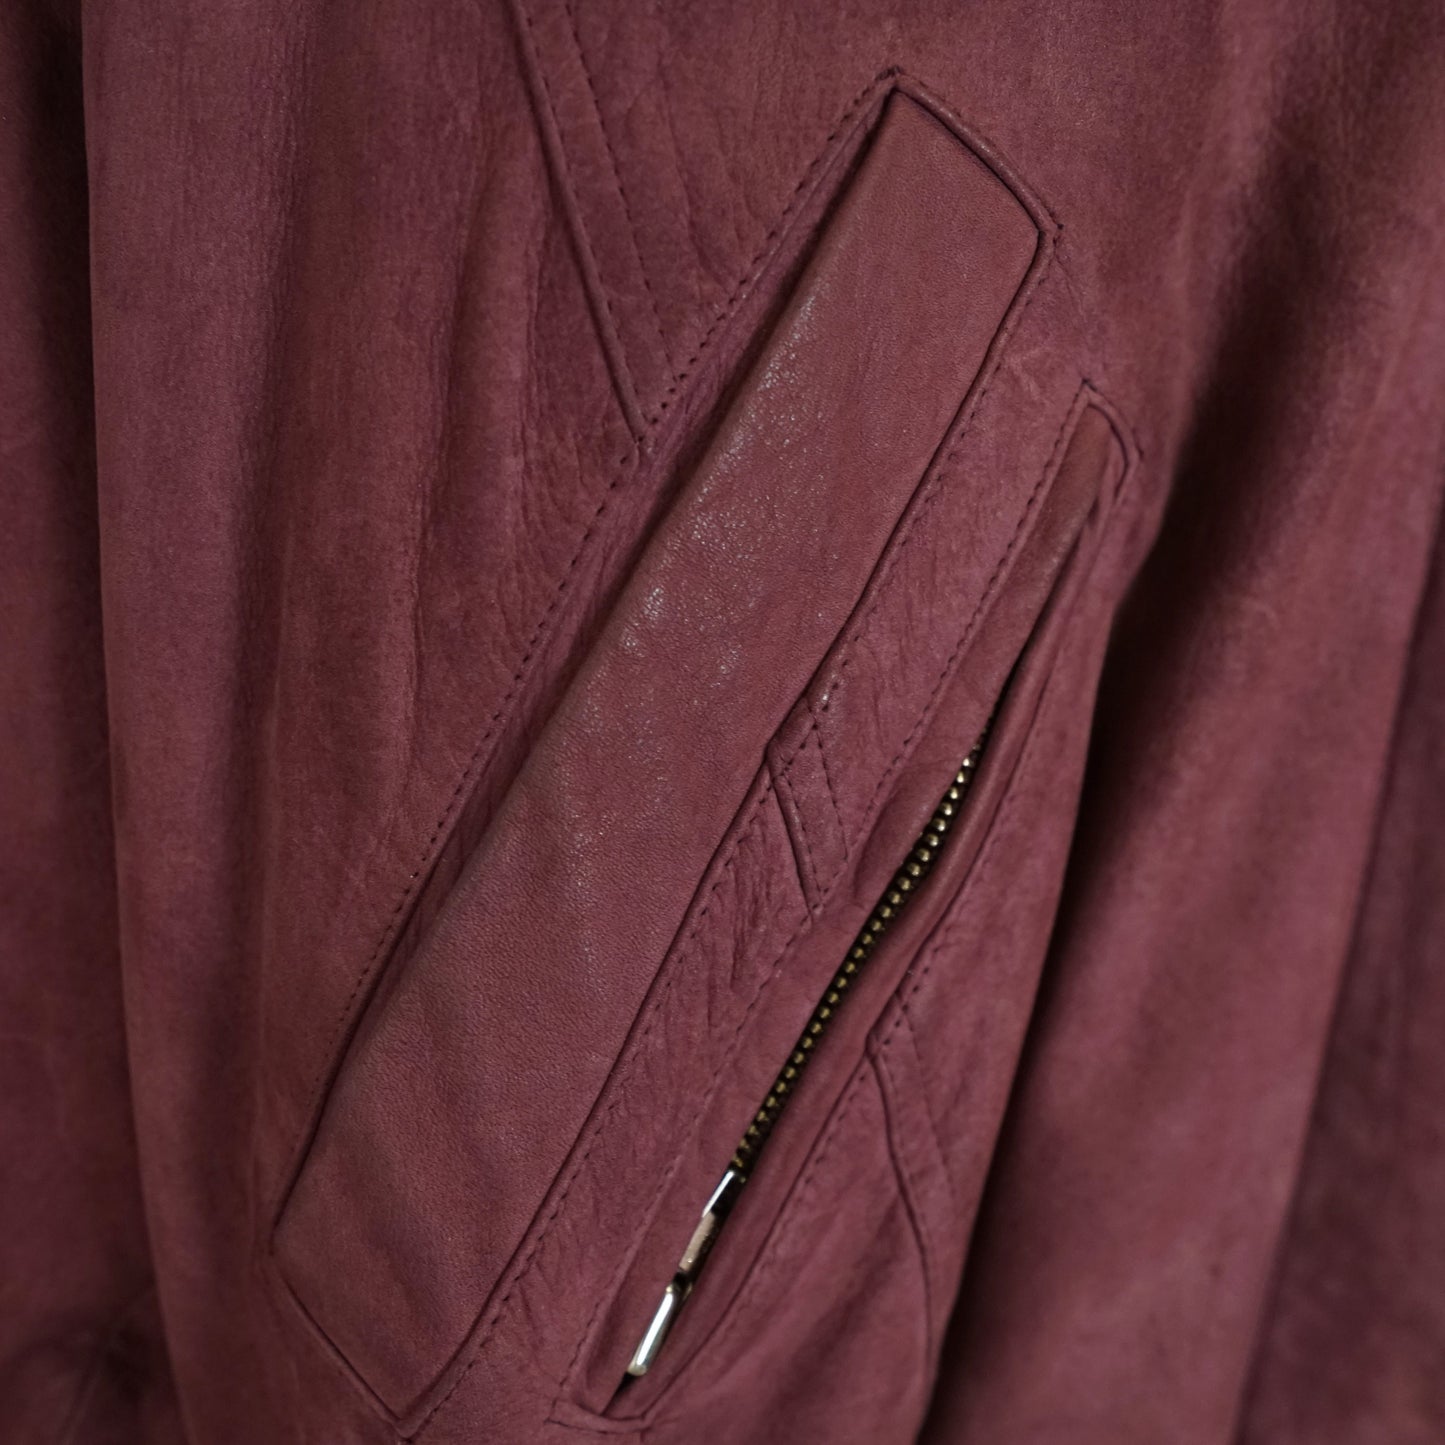 Vintage Leather Jacket Size L purple